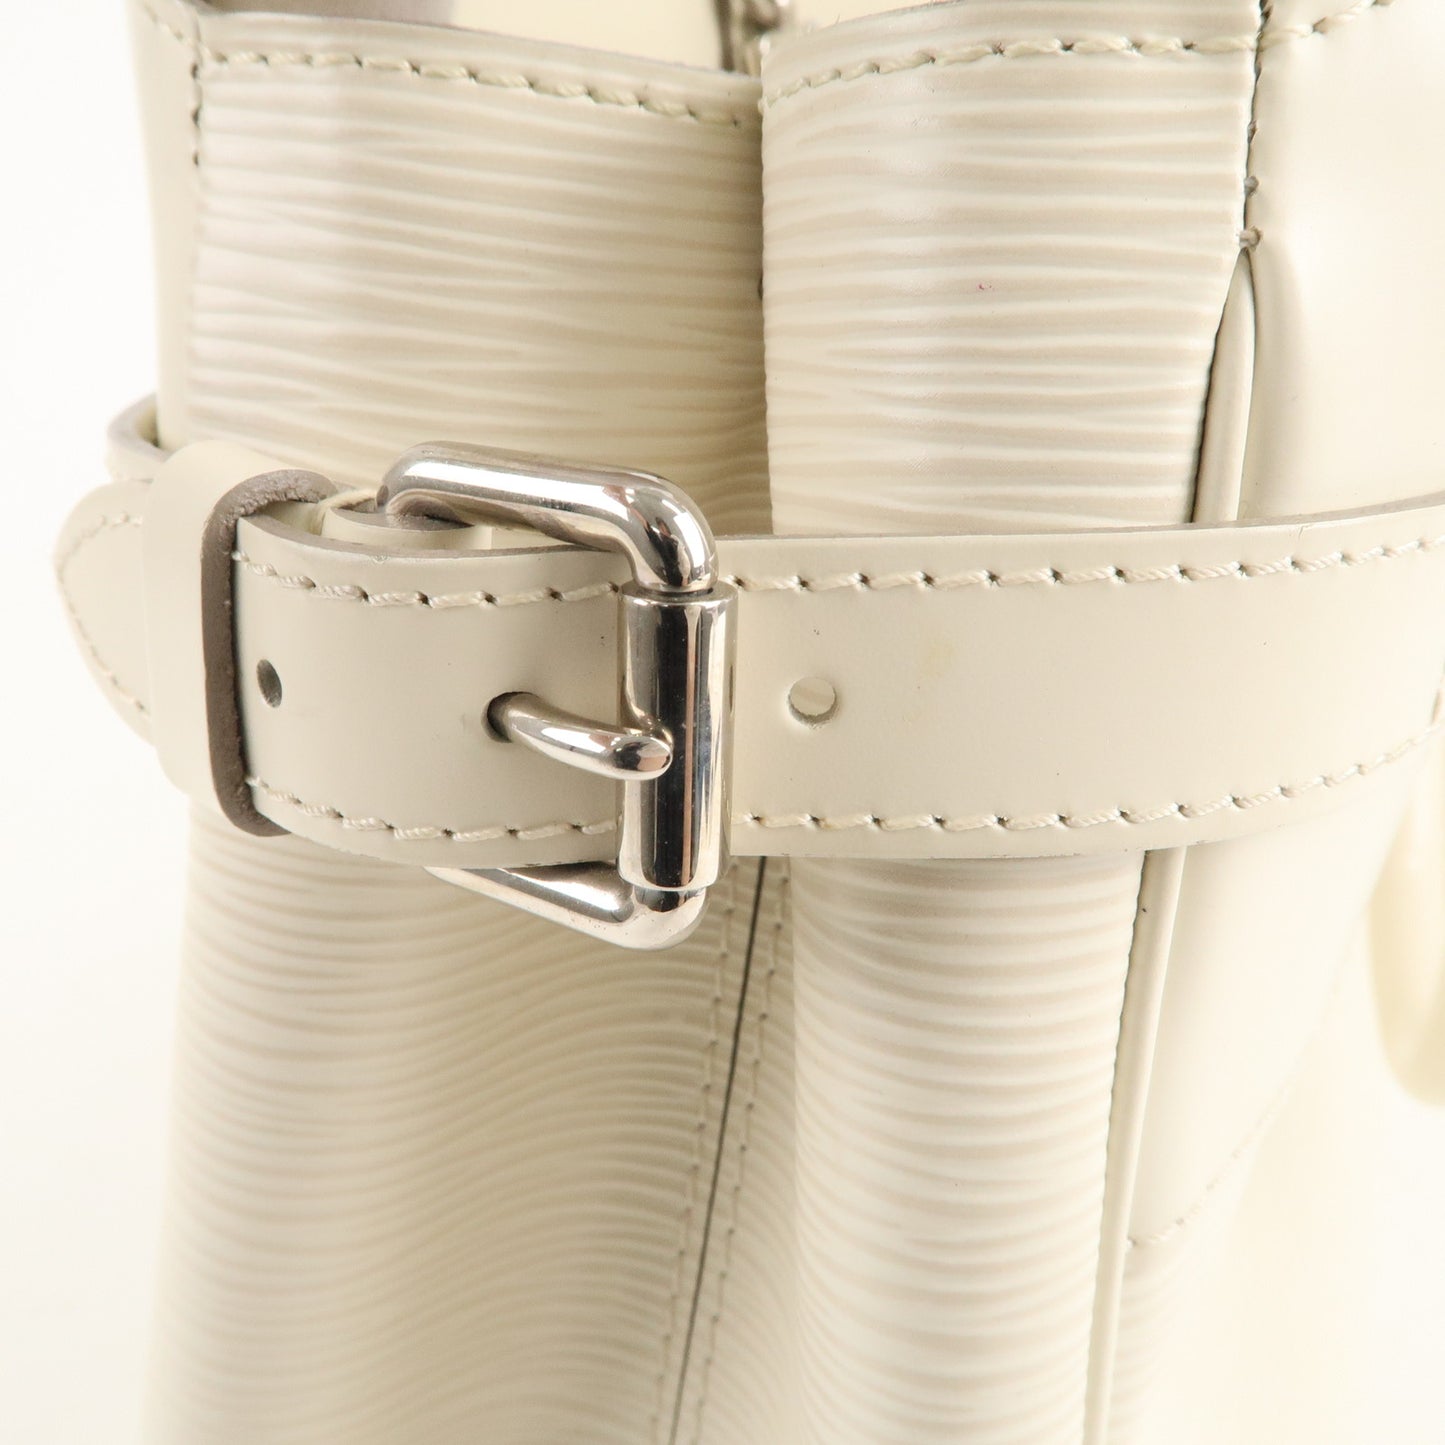 Louis Vuitton, Bags, Louis Vuitton Epi Passy Gm Tote Bag Yvoire White  Leather